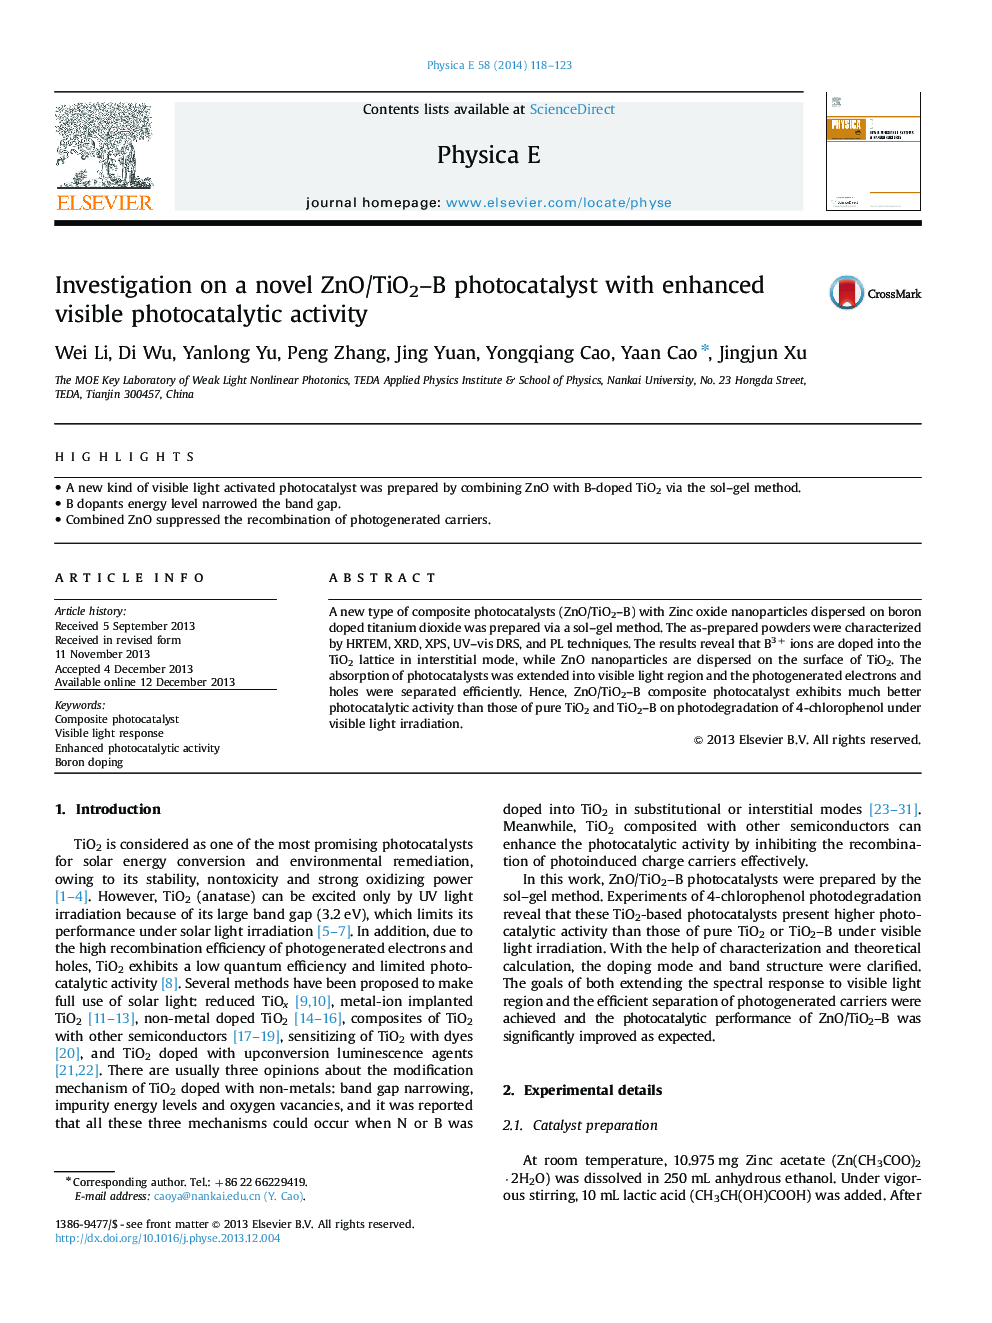 Investigation on a novel ZnO/TiO2–B photocatalyst with enhanced visible photocatalytic activity